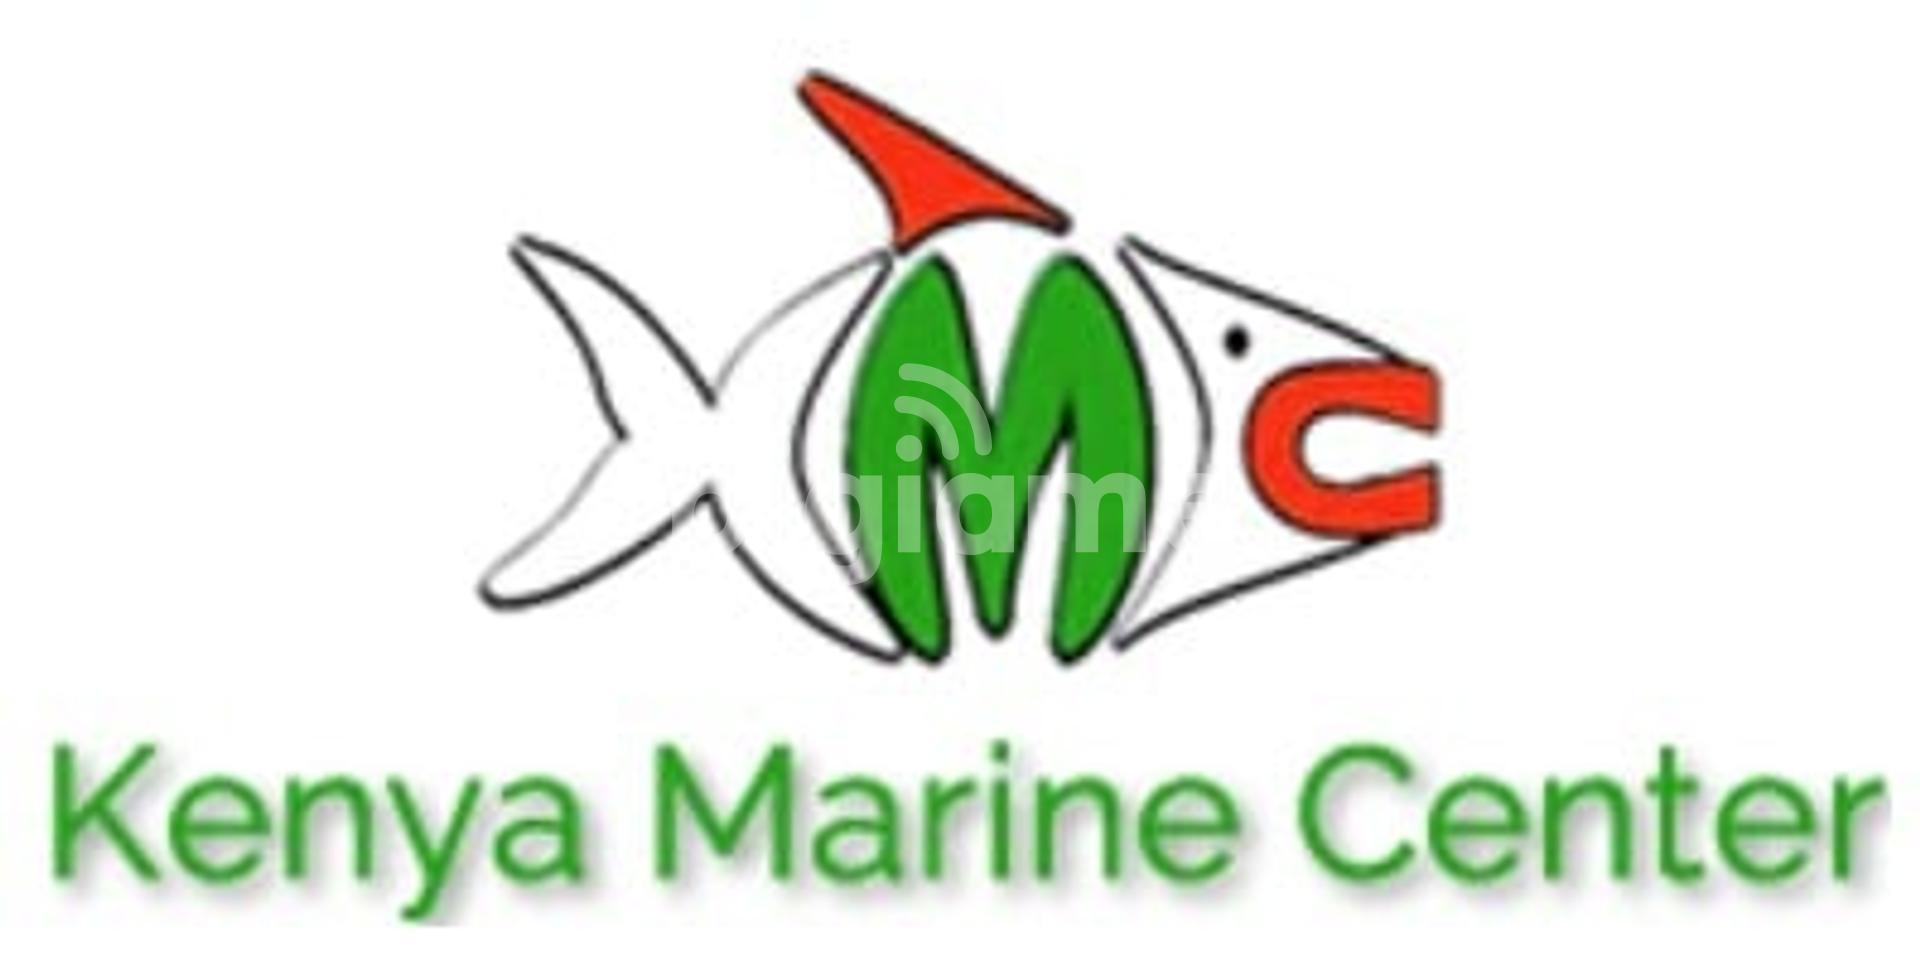 Kenya Marine Center (Ndune Kenya Ltd)